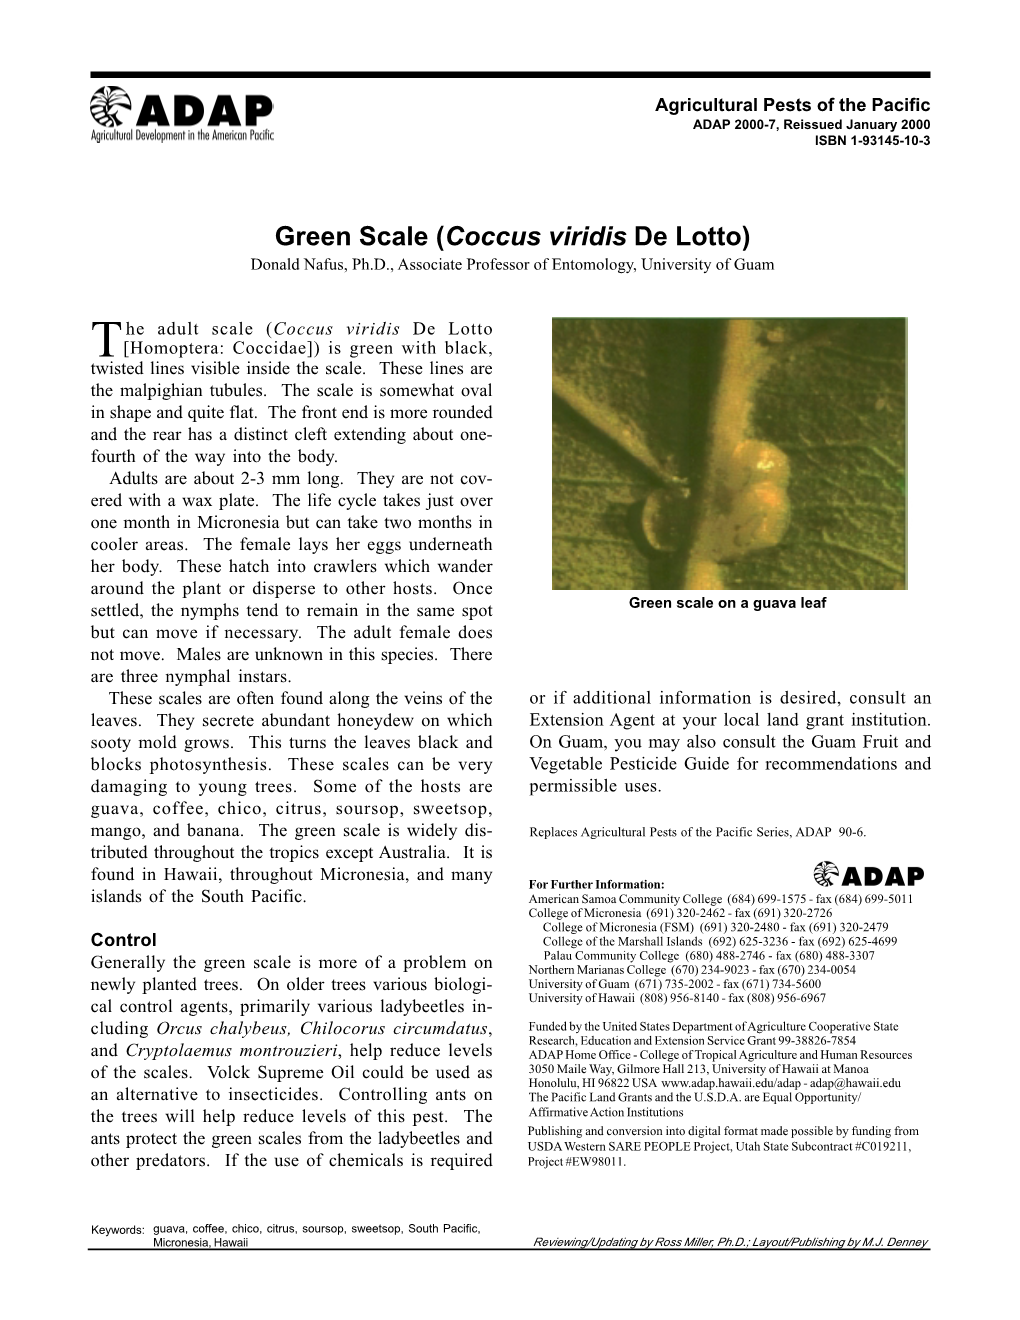 Green Scale (Coccus Viridis De Lotto) Donald Nafus, Ph.D., Associate Professor of Entomology, University of Guam